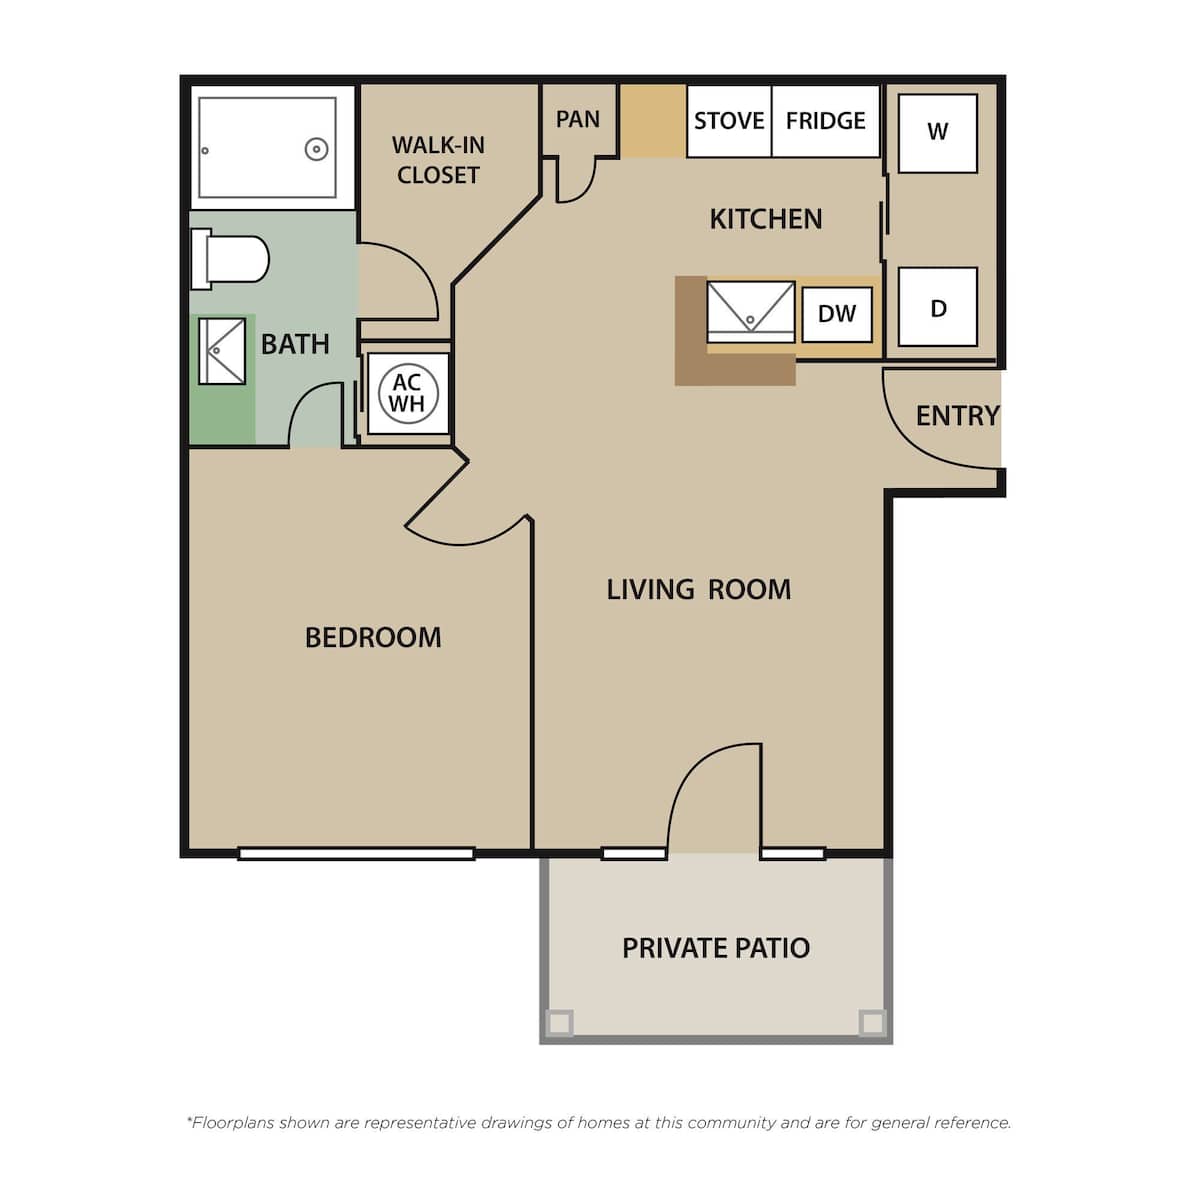 Floorplan diagram for GROVE A2, showing 1 bedroom